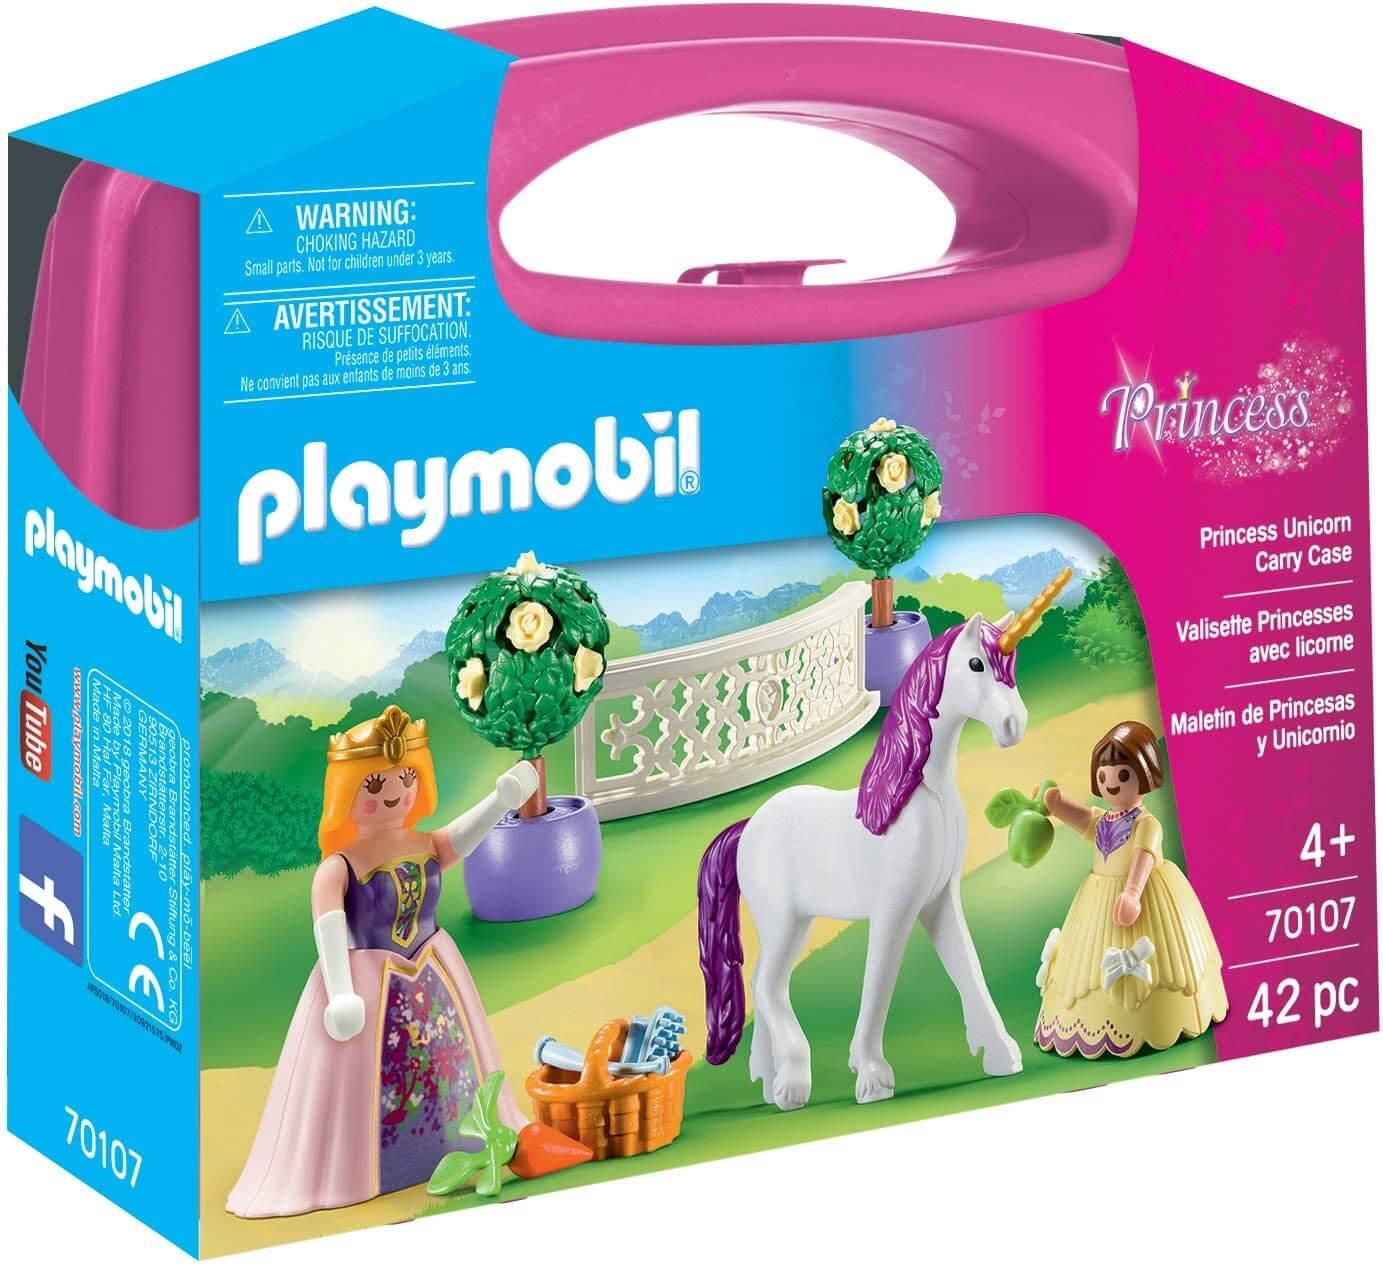 Playmobil Princess 70107 Princess Unicorn Carry Case